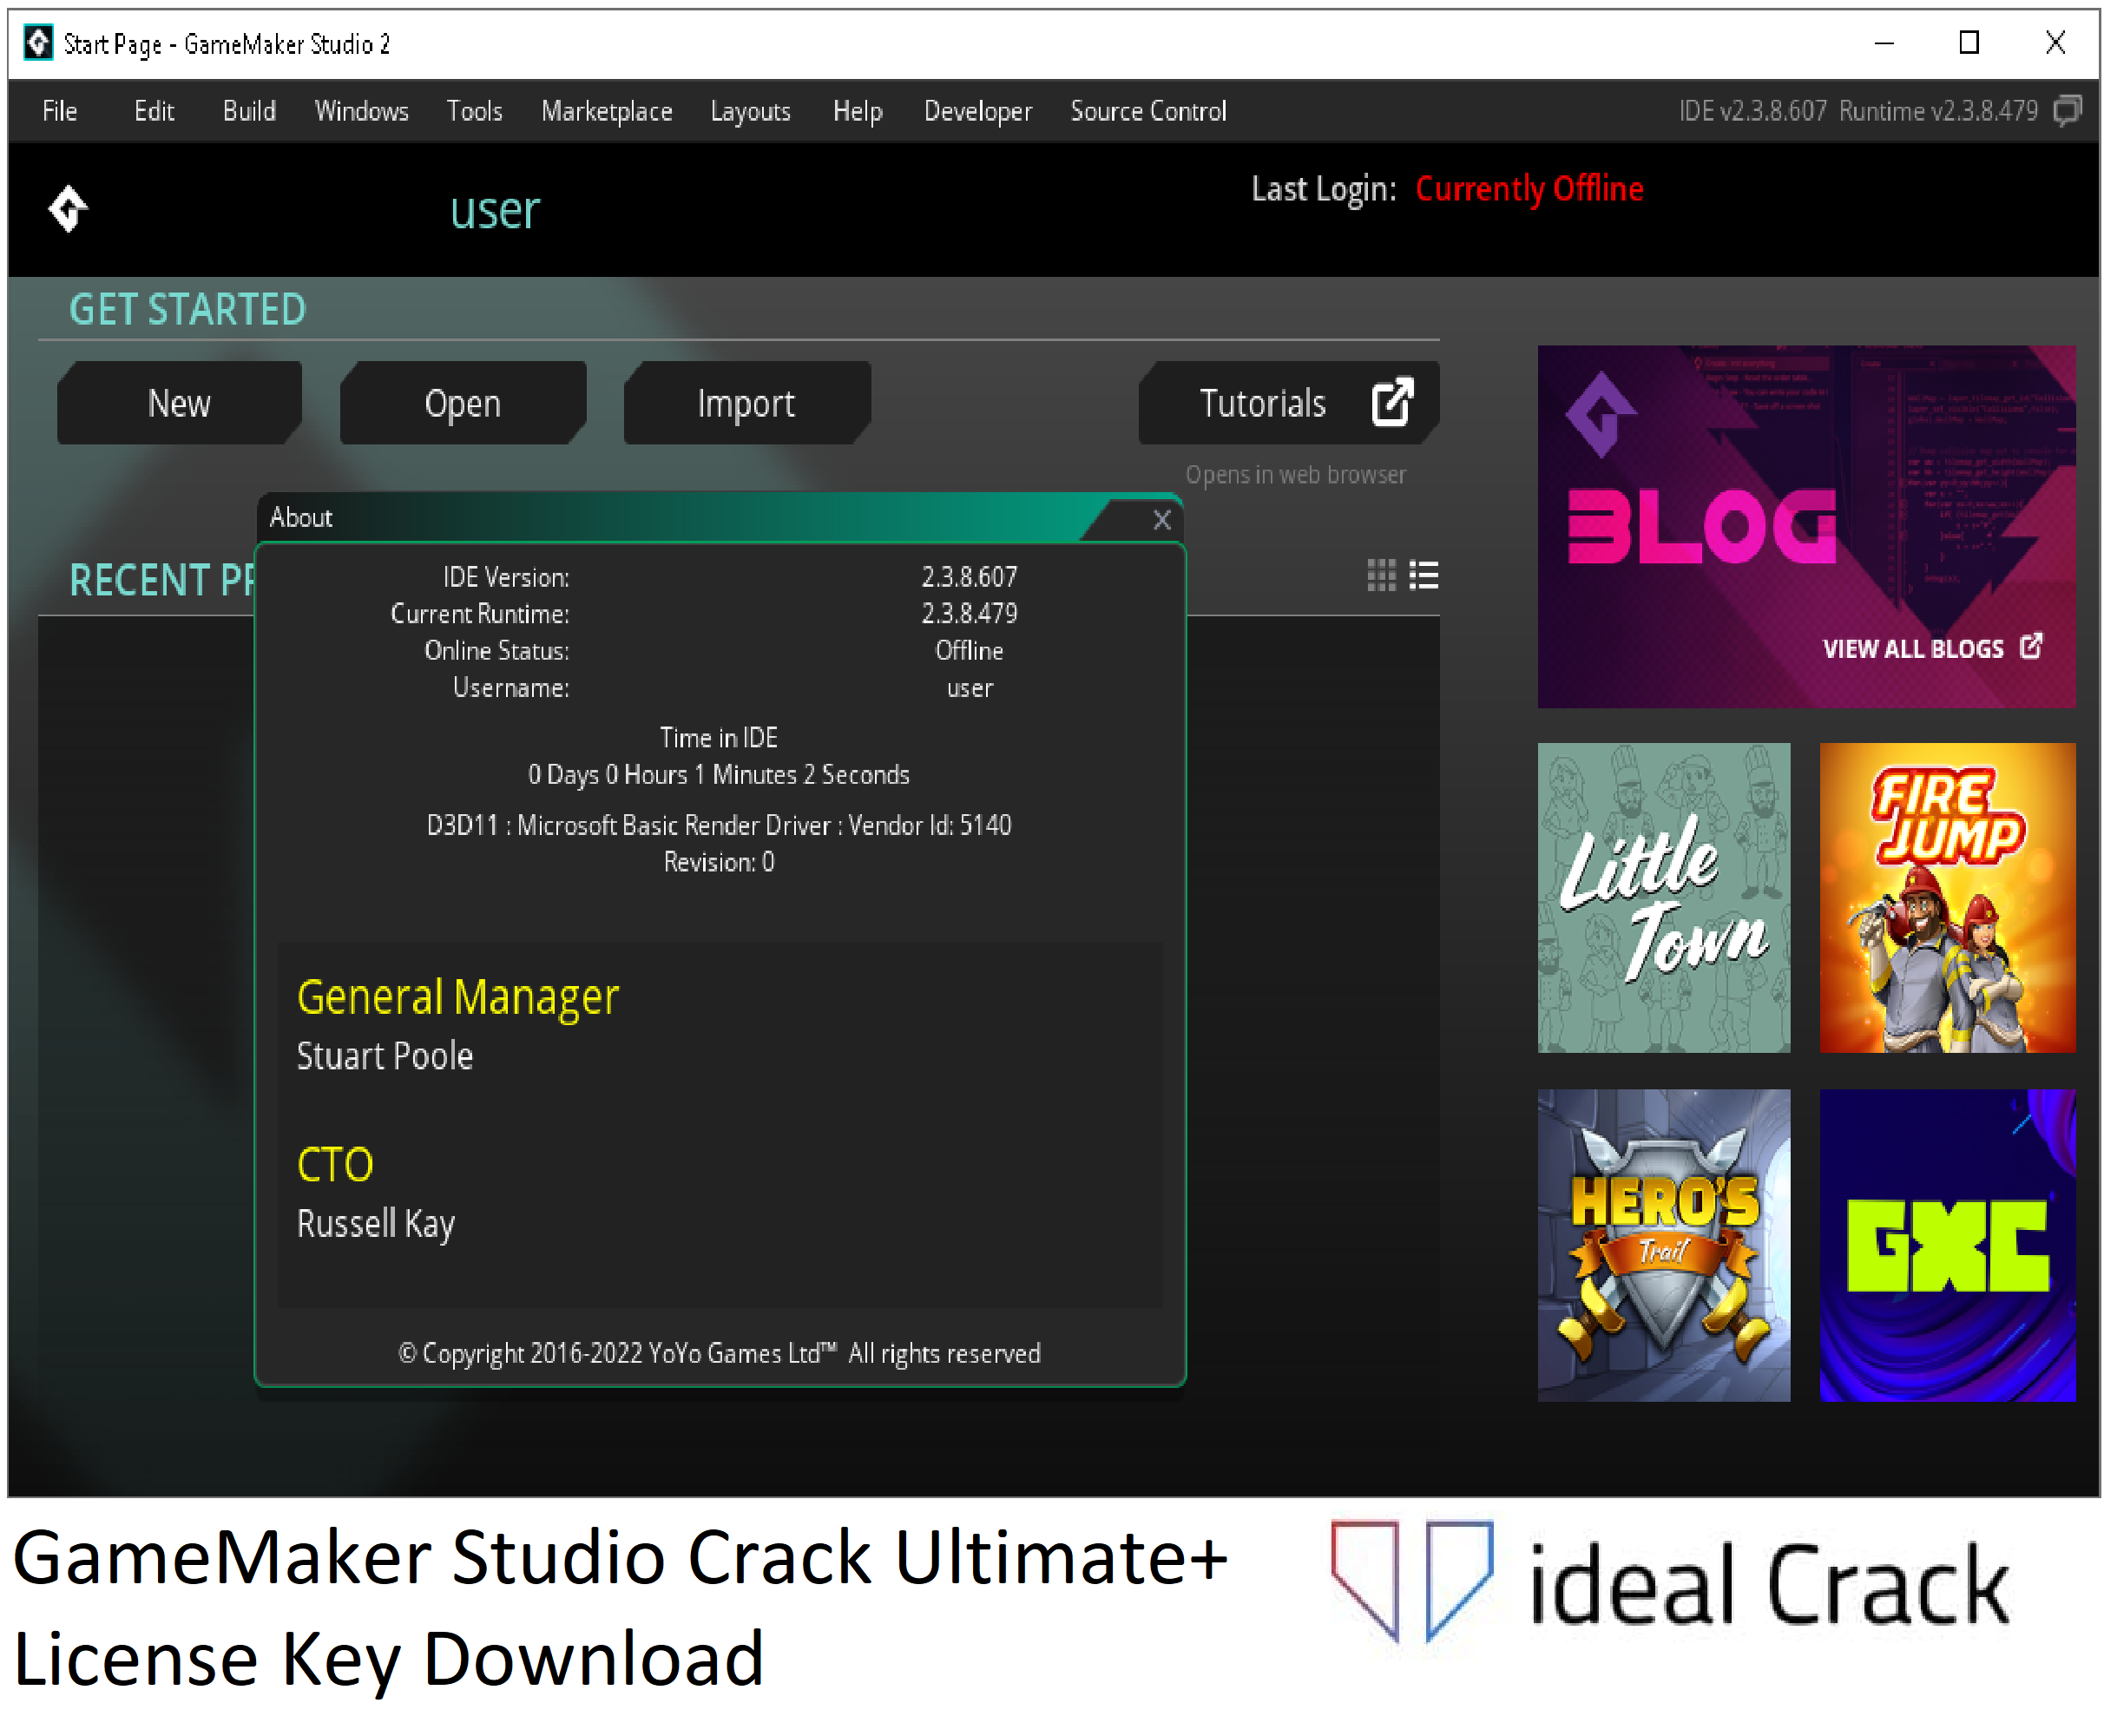 GameMaker Studio Crack Ultimate+ License Key Download